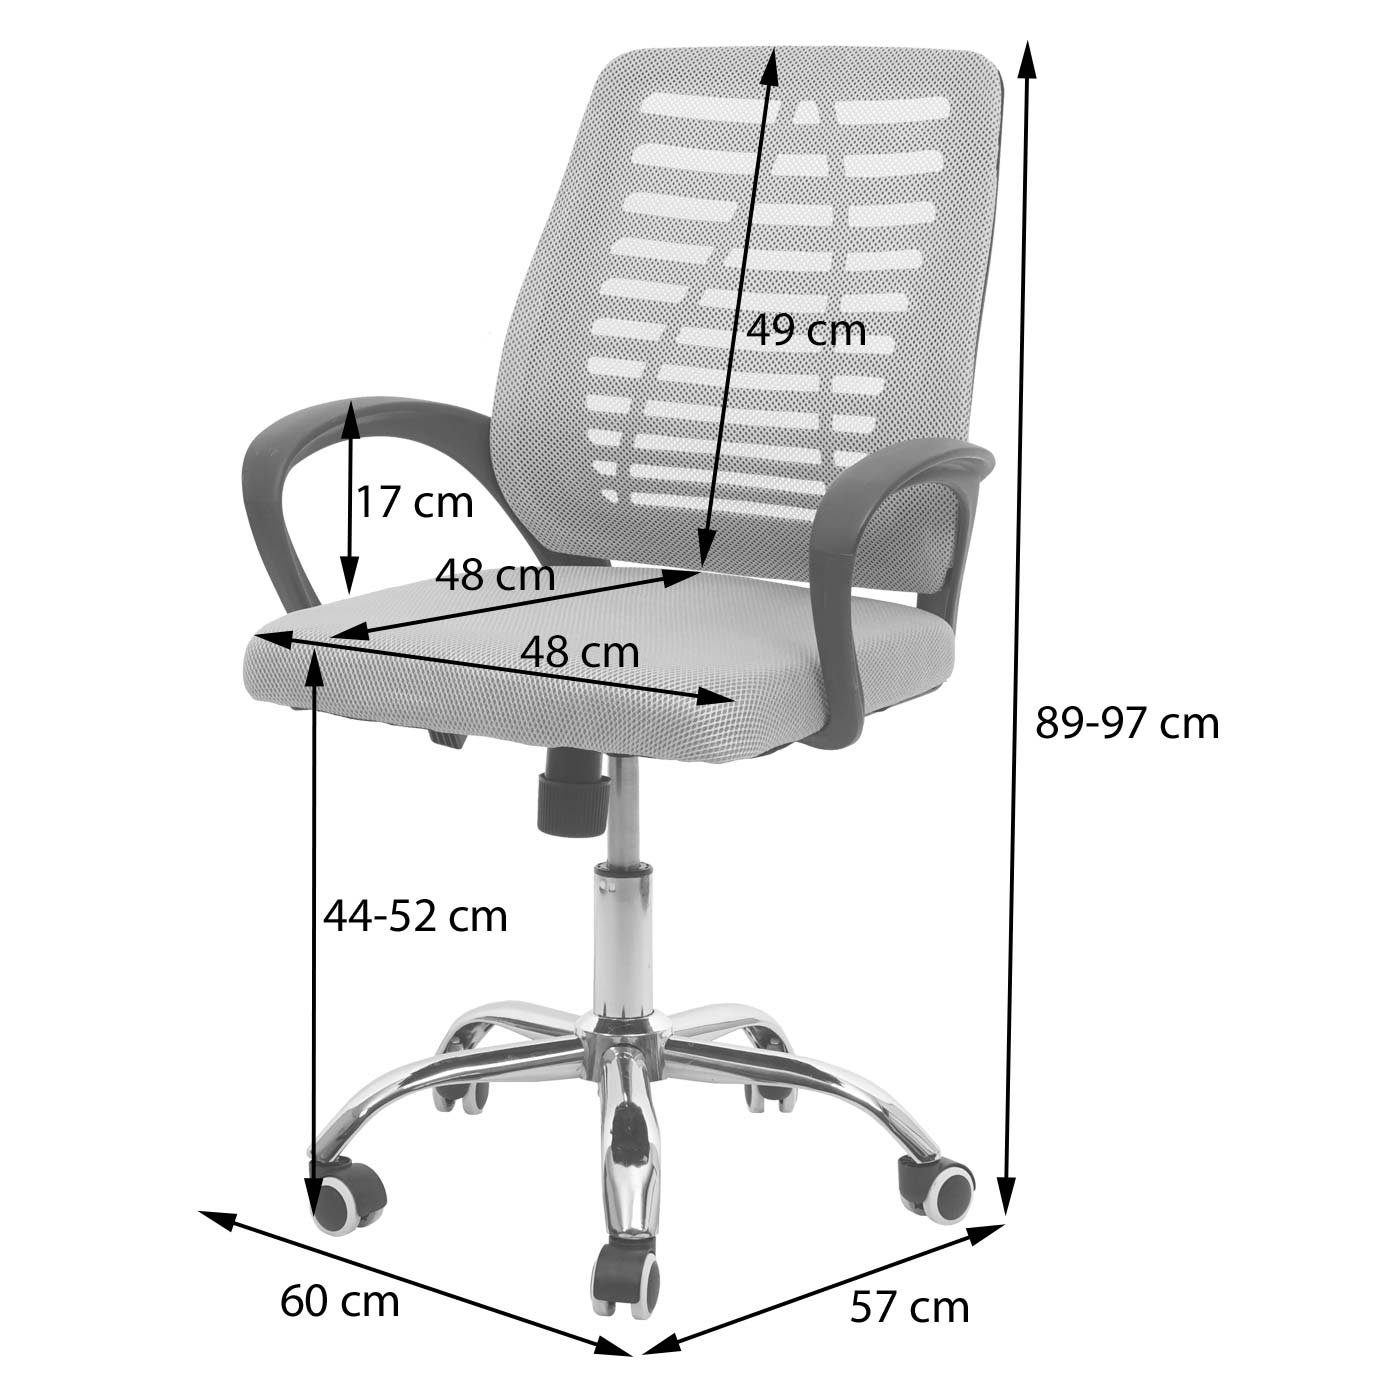 MCW Bürostuhl MCW-L44, Mit Formgebung, Bequeme Rückenlehne ergonomische Armlehne, lila